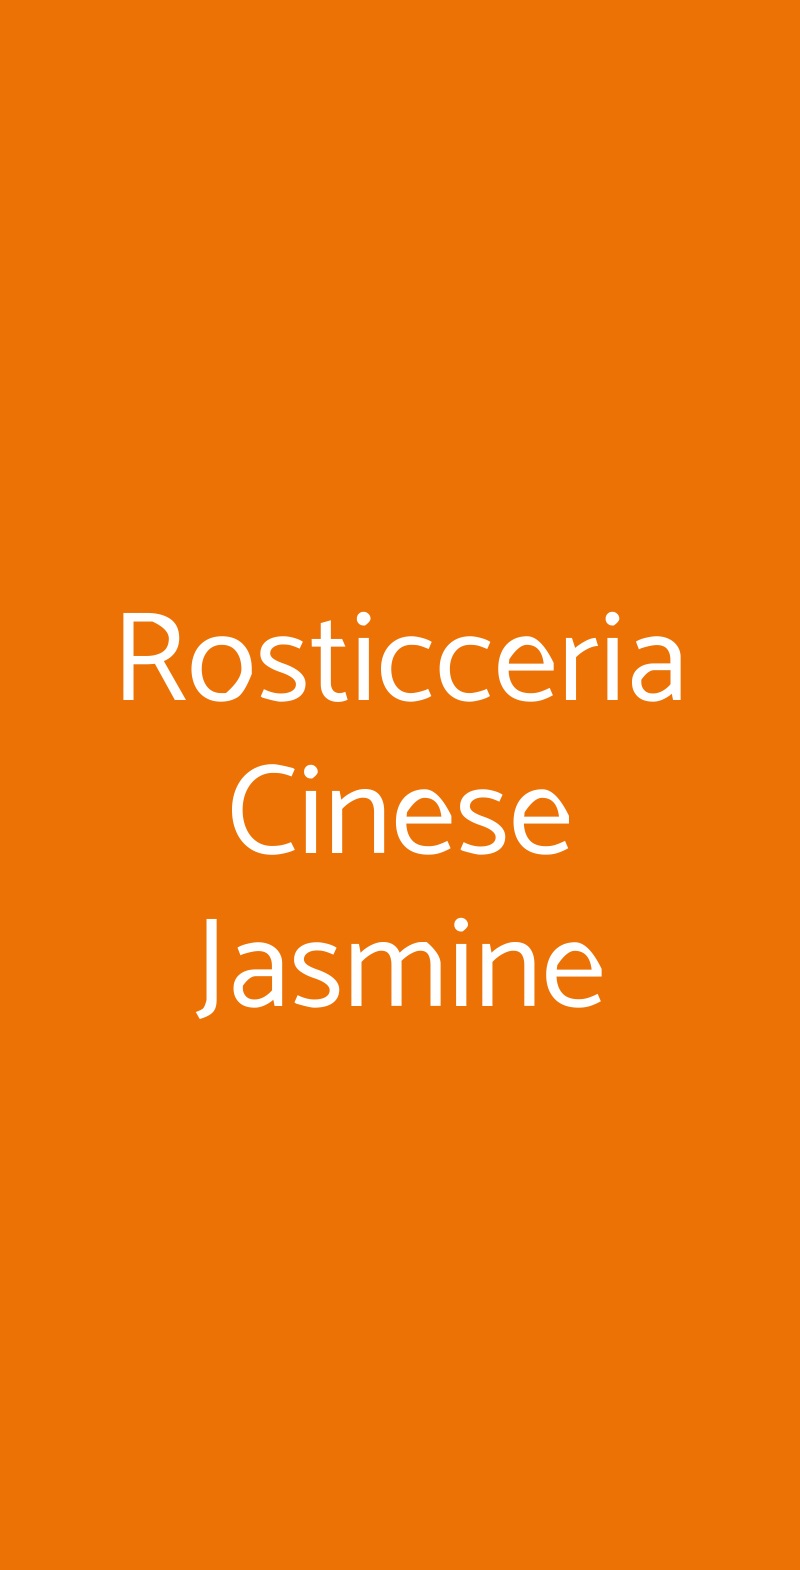 Rosticceria Cinese Jasmine Firenze menù 1 pagina